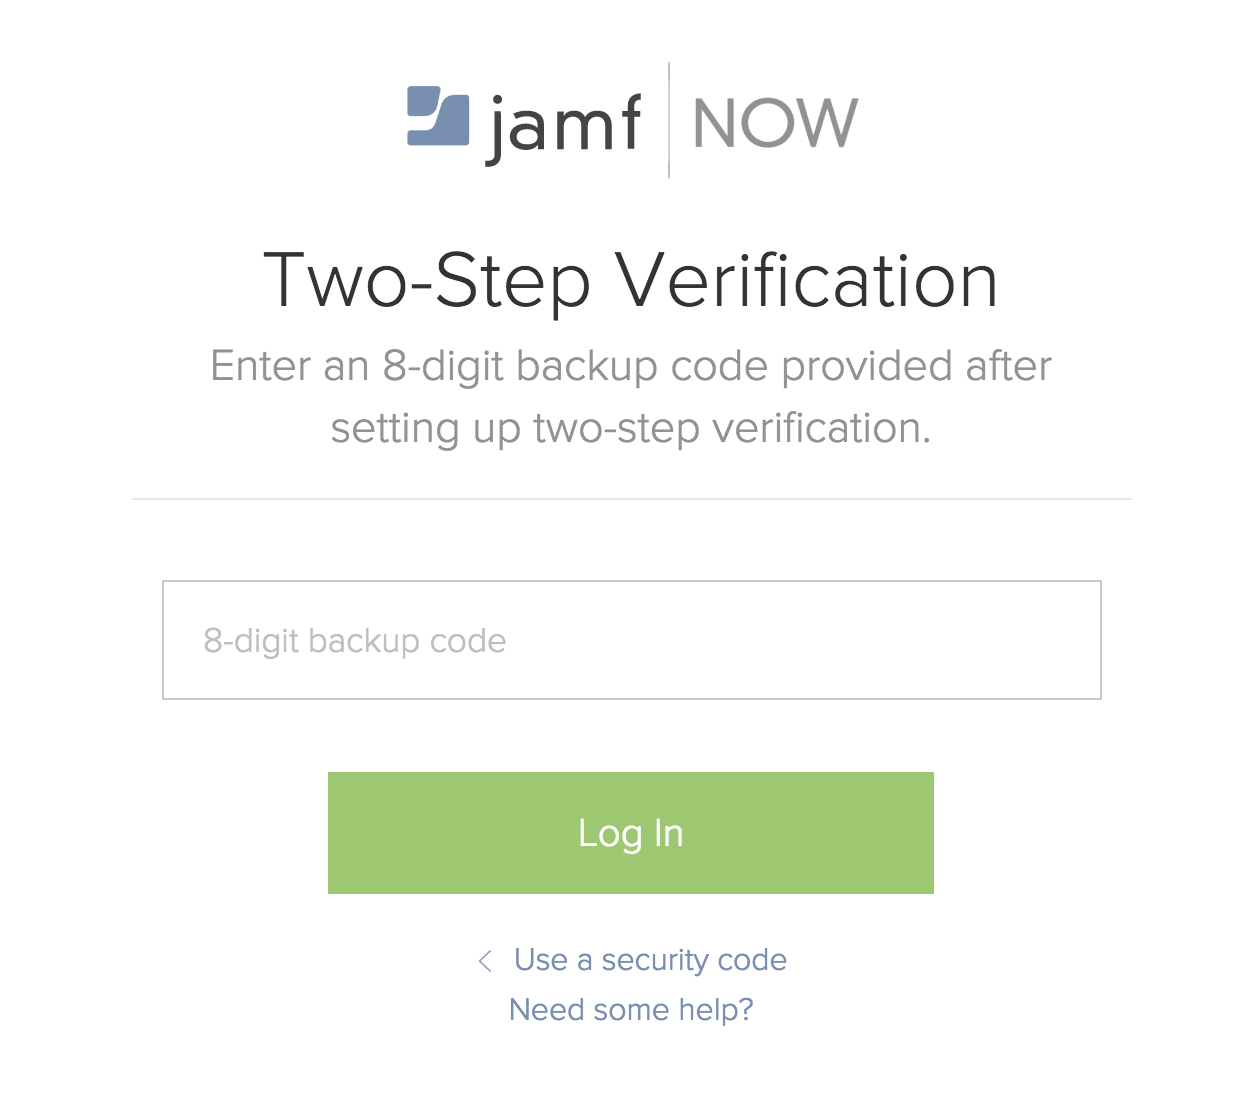 Captura de pantalla de la verificación en dos pasos, con un campo para introducir tu código de reserva de 8 dígitos.